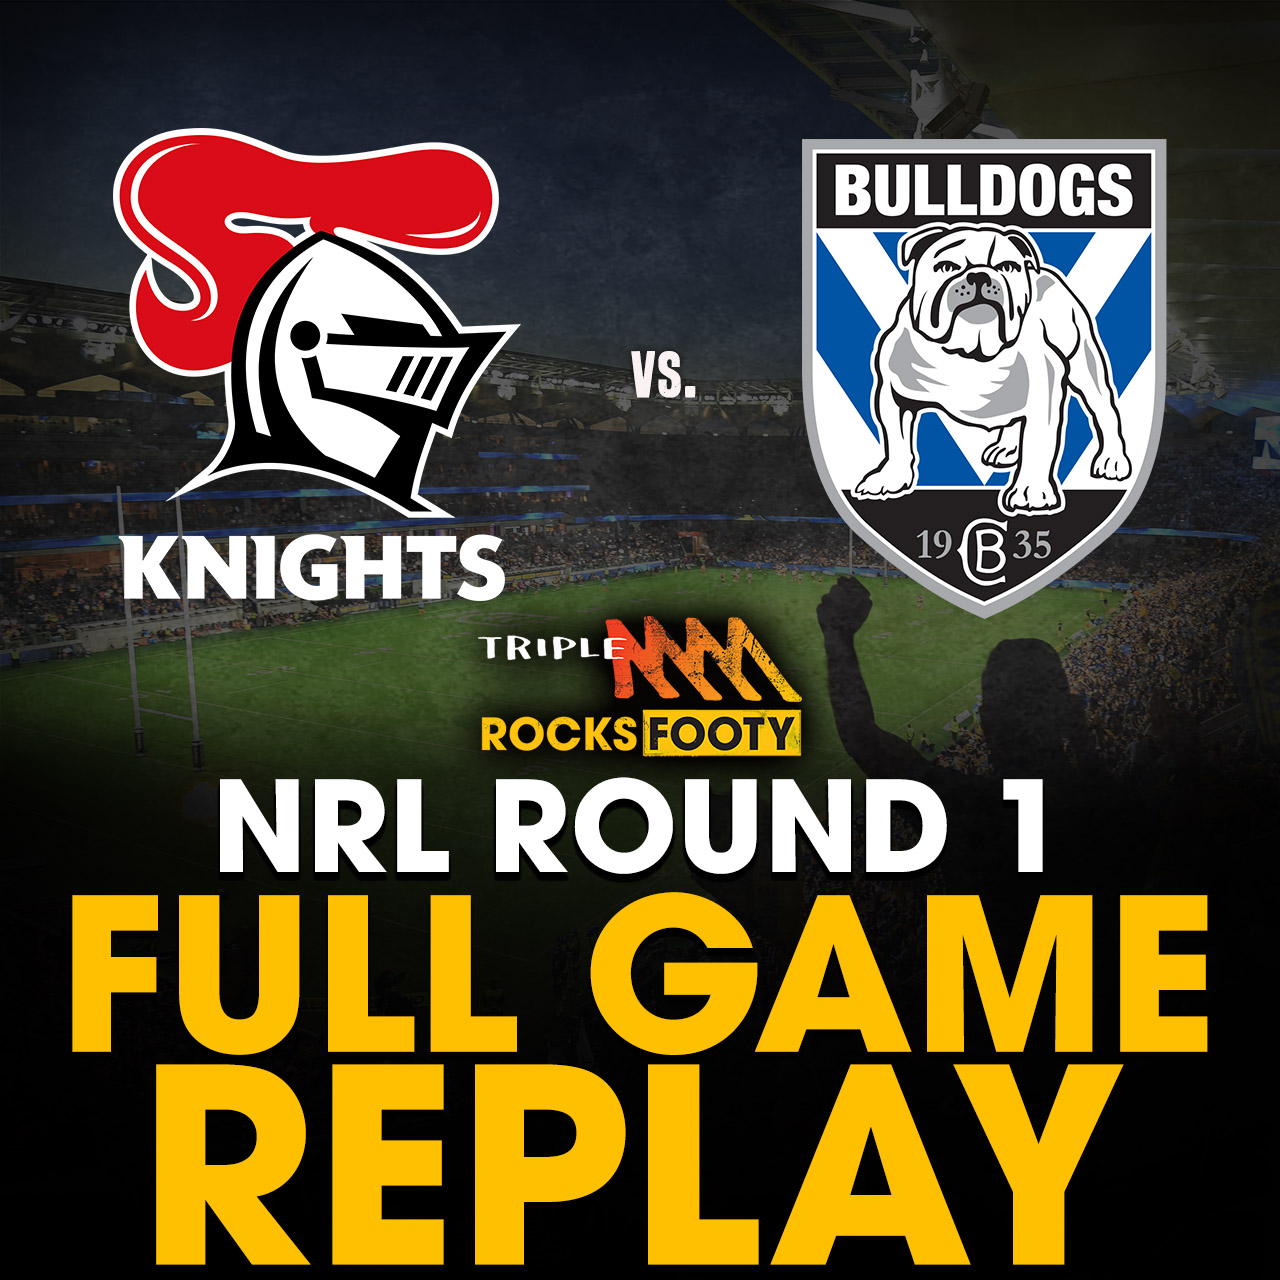 FULL GAME REPLAY | Newcastle Knights vs. Canterbury Bulldogs